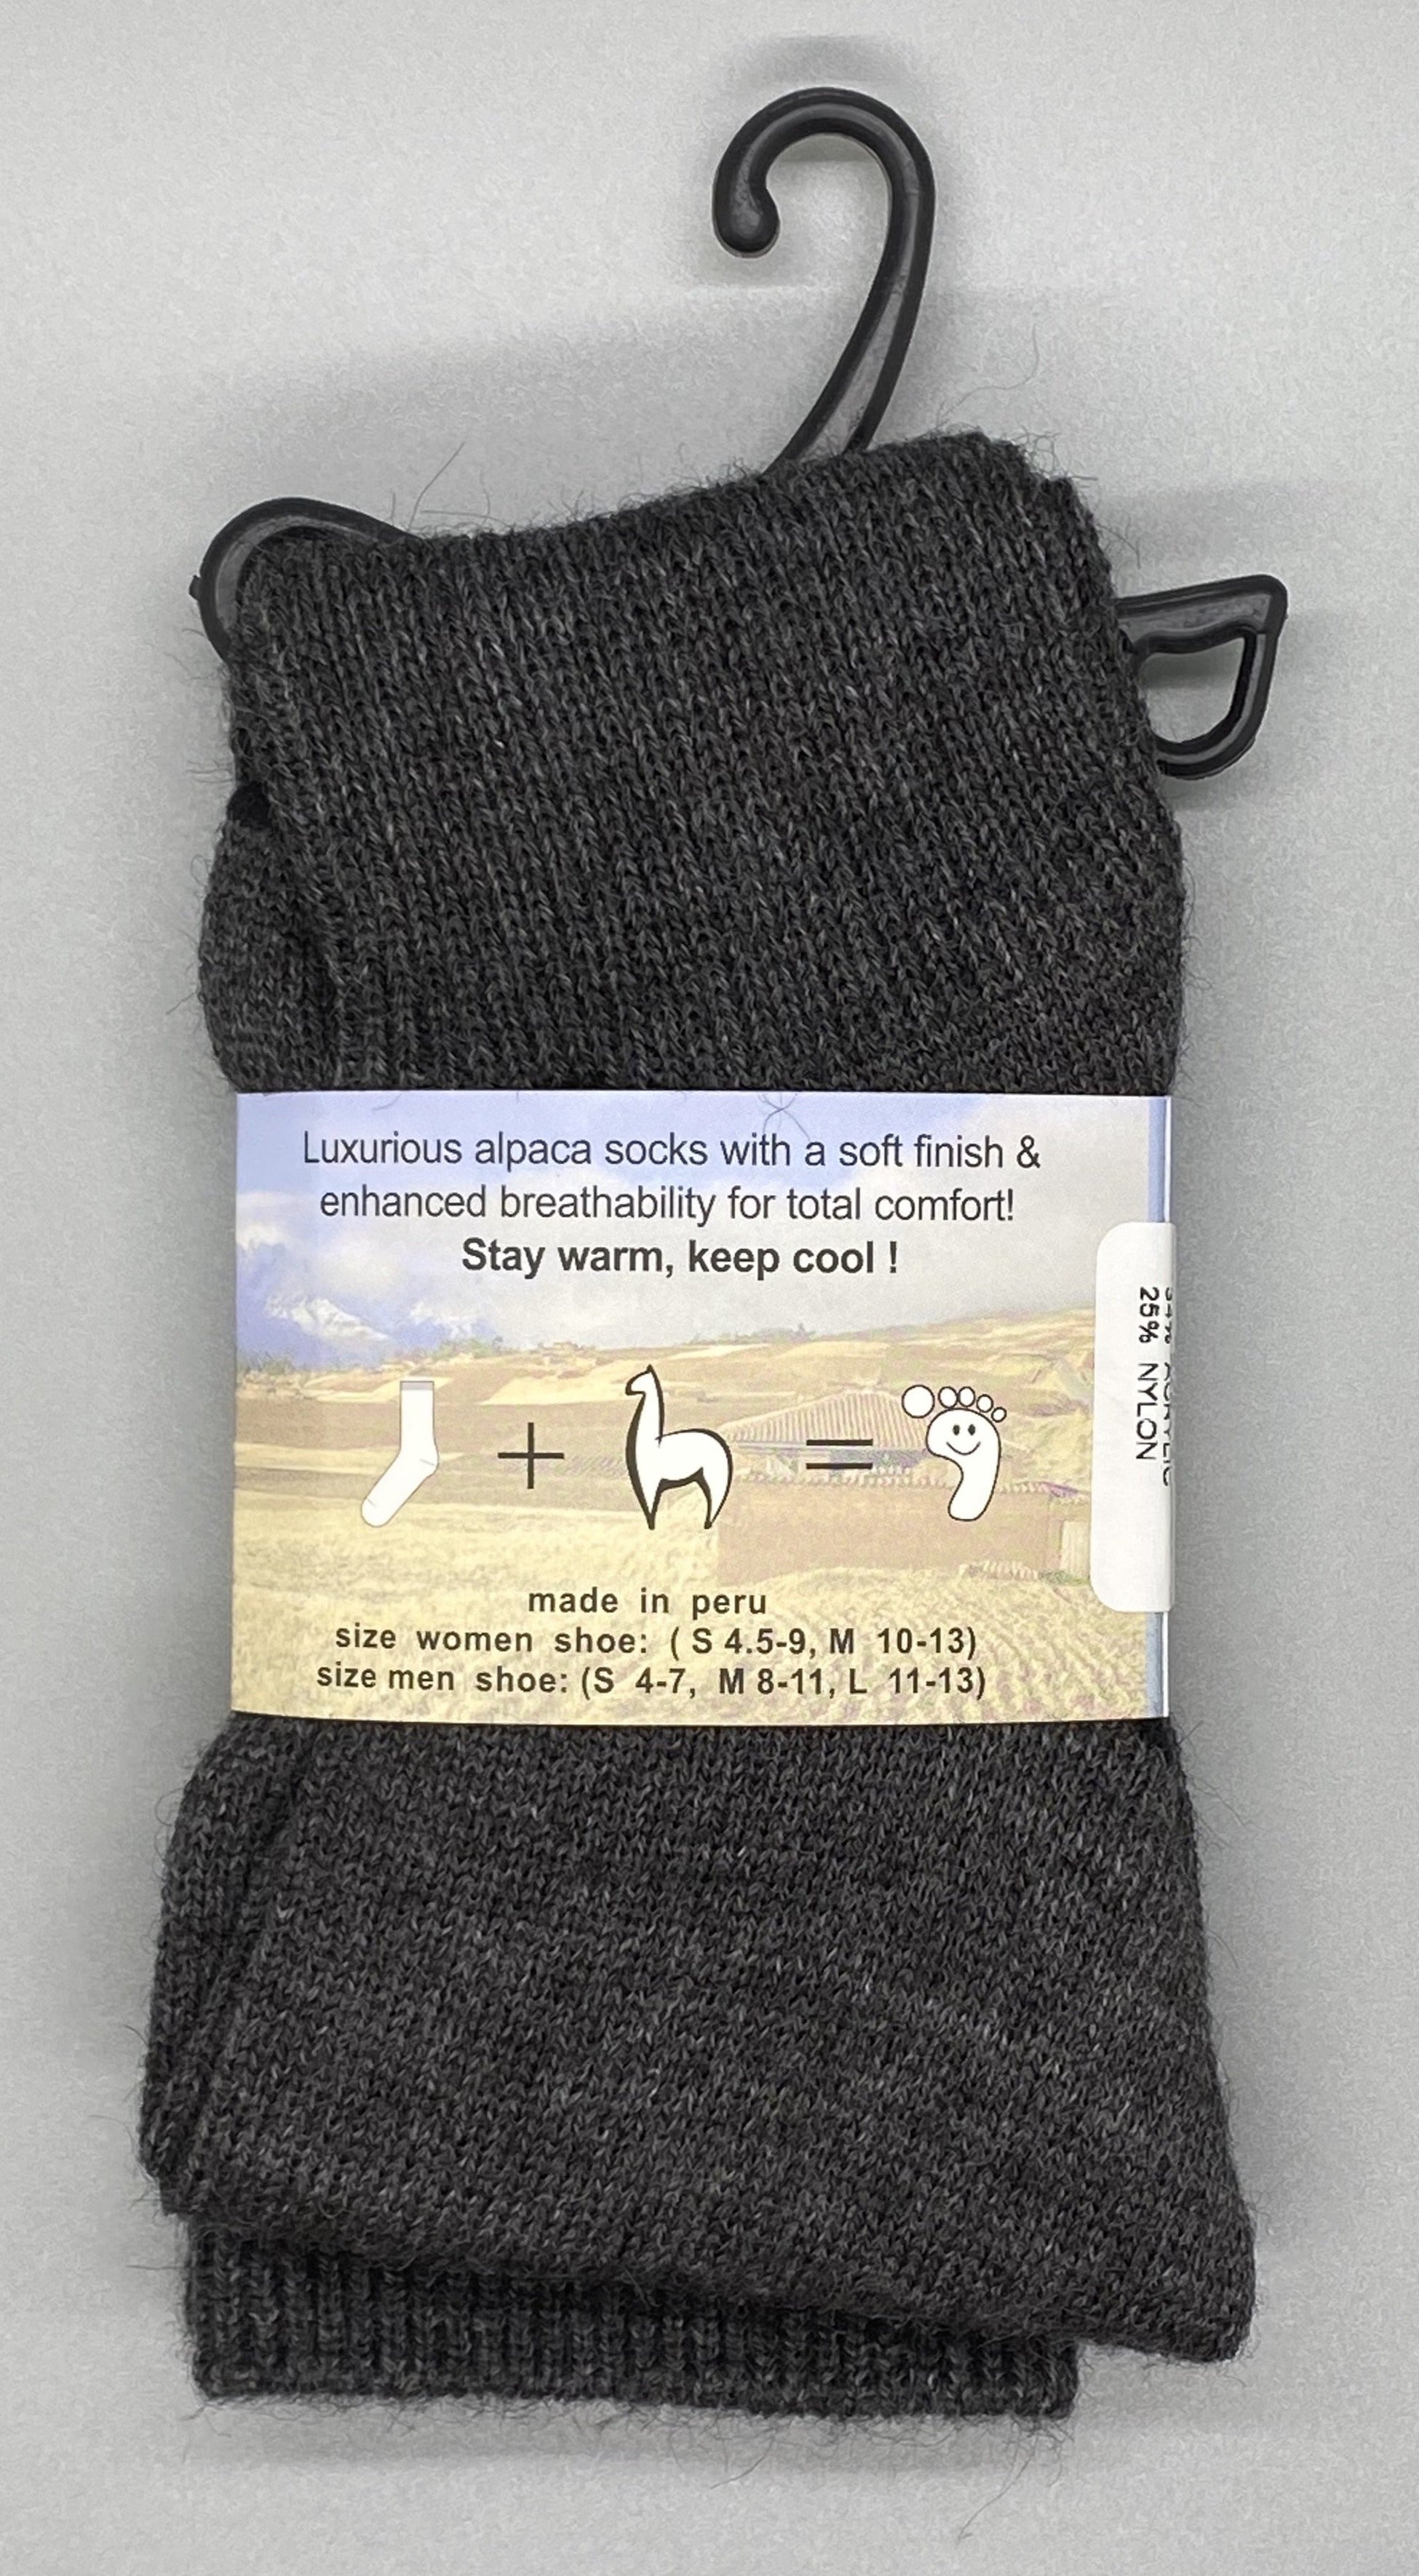 Shupaca Alpaca | Alpaca Warm Lightweight and Breathable Wool Socks, Socks, Shupaca Alpaca, Defiance Outdoor Gear Co.